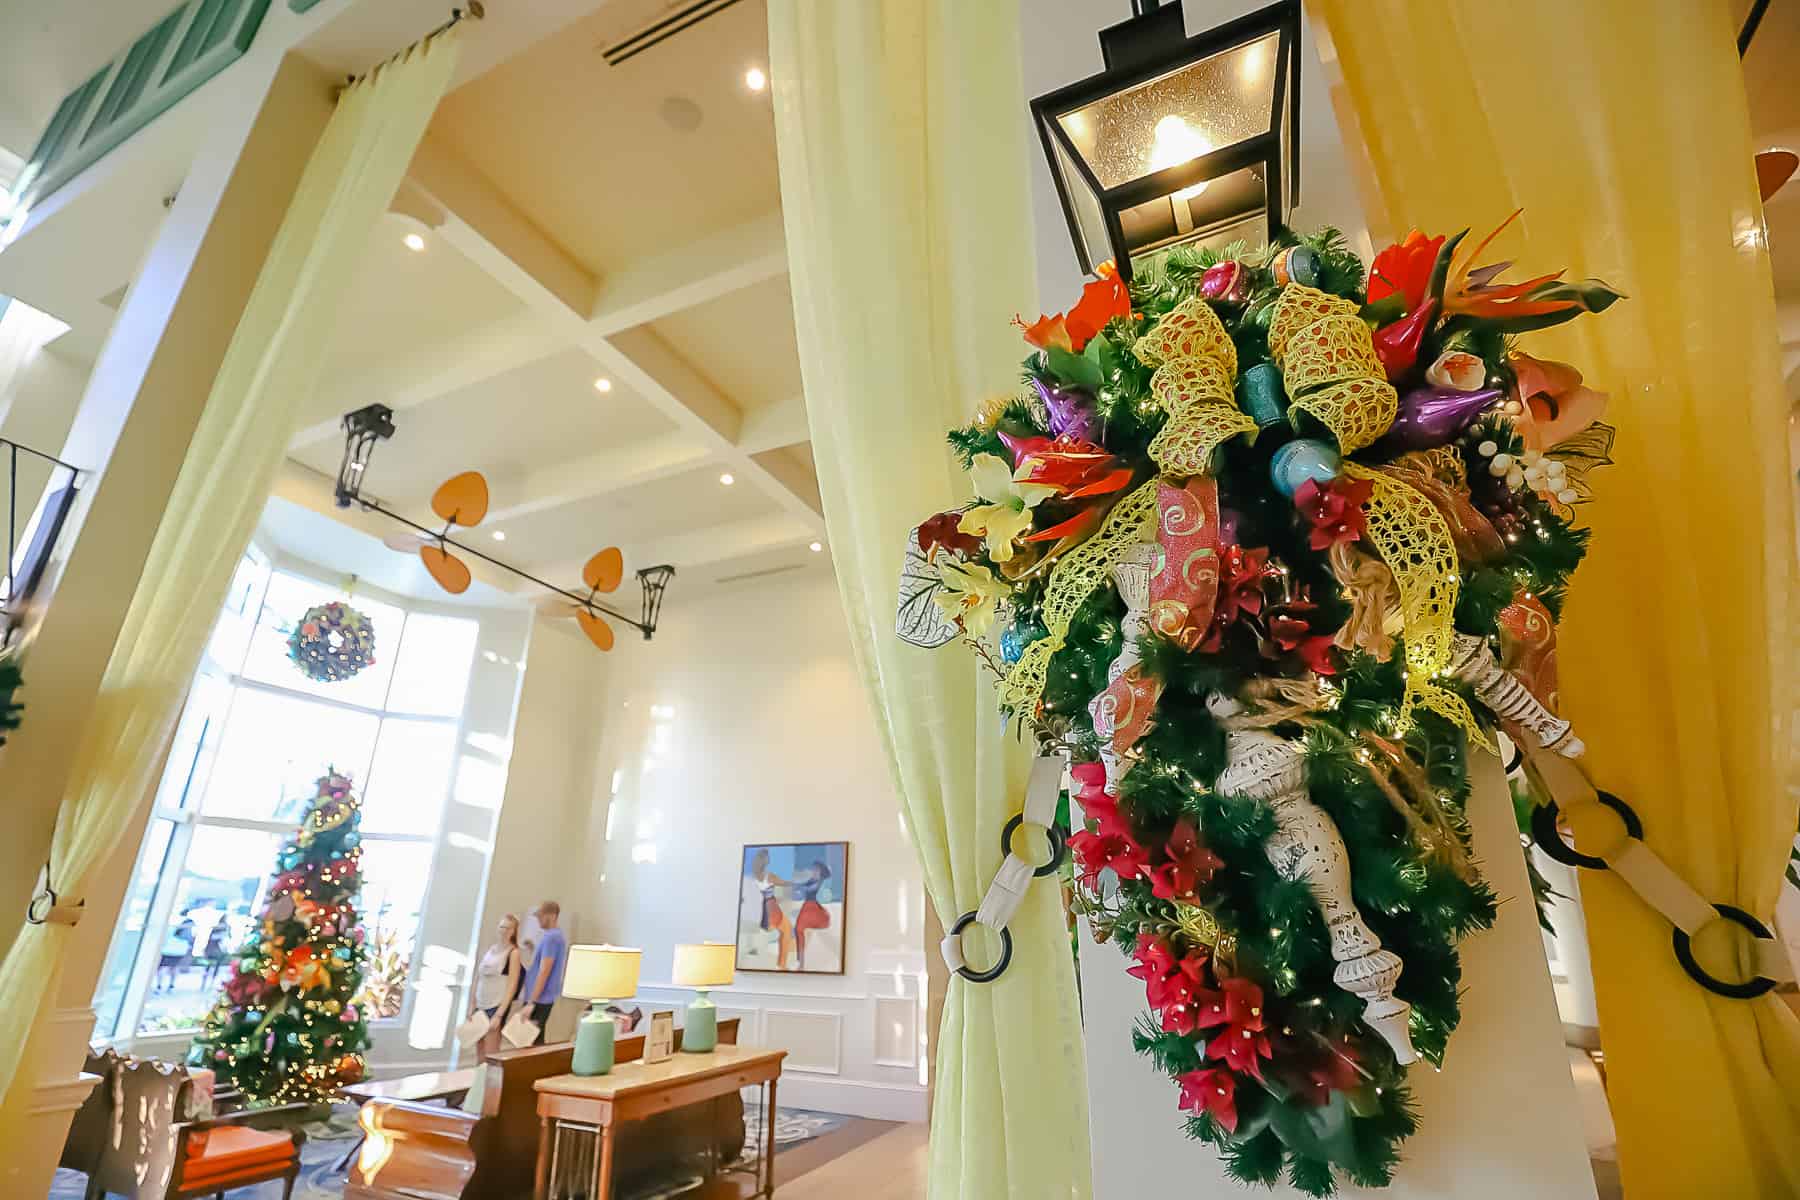 Christmas florals at Disney's Caribbean Beach hung around the light fixtures. 